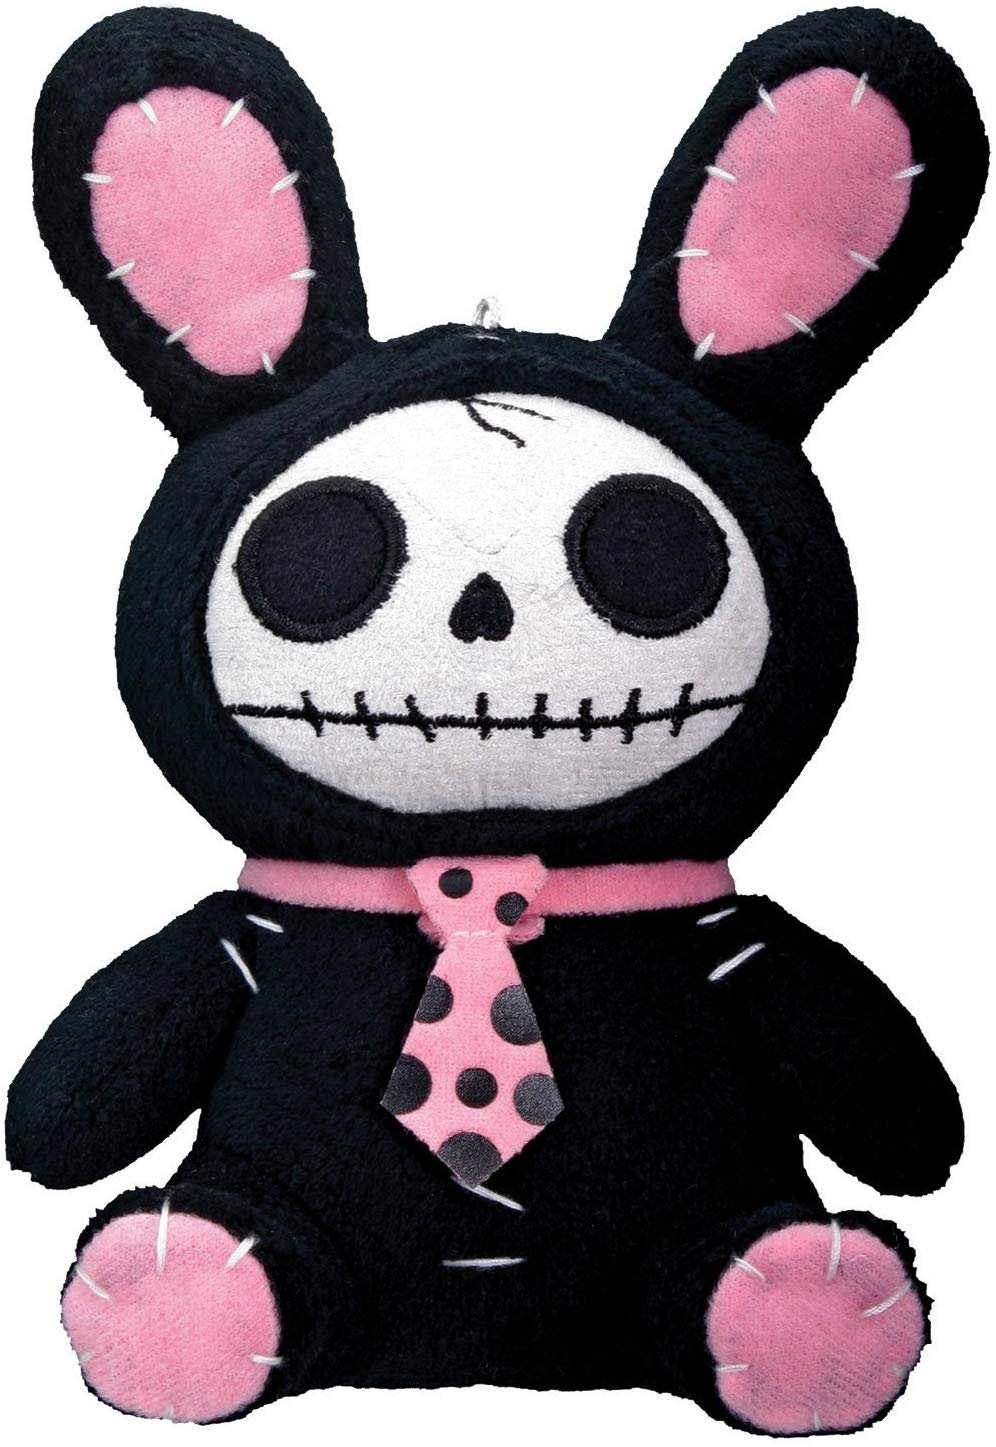 Bunny Furry Bones Plush Stuffed Animal Doll, Black and Pink Collectible